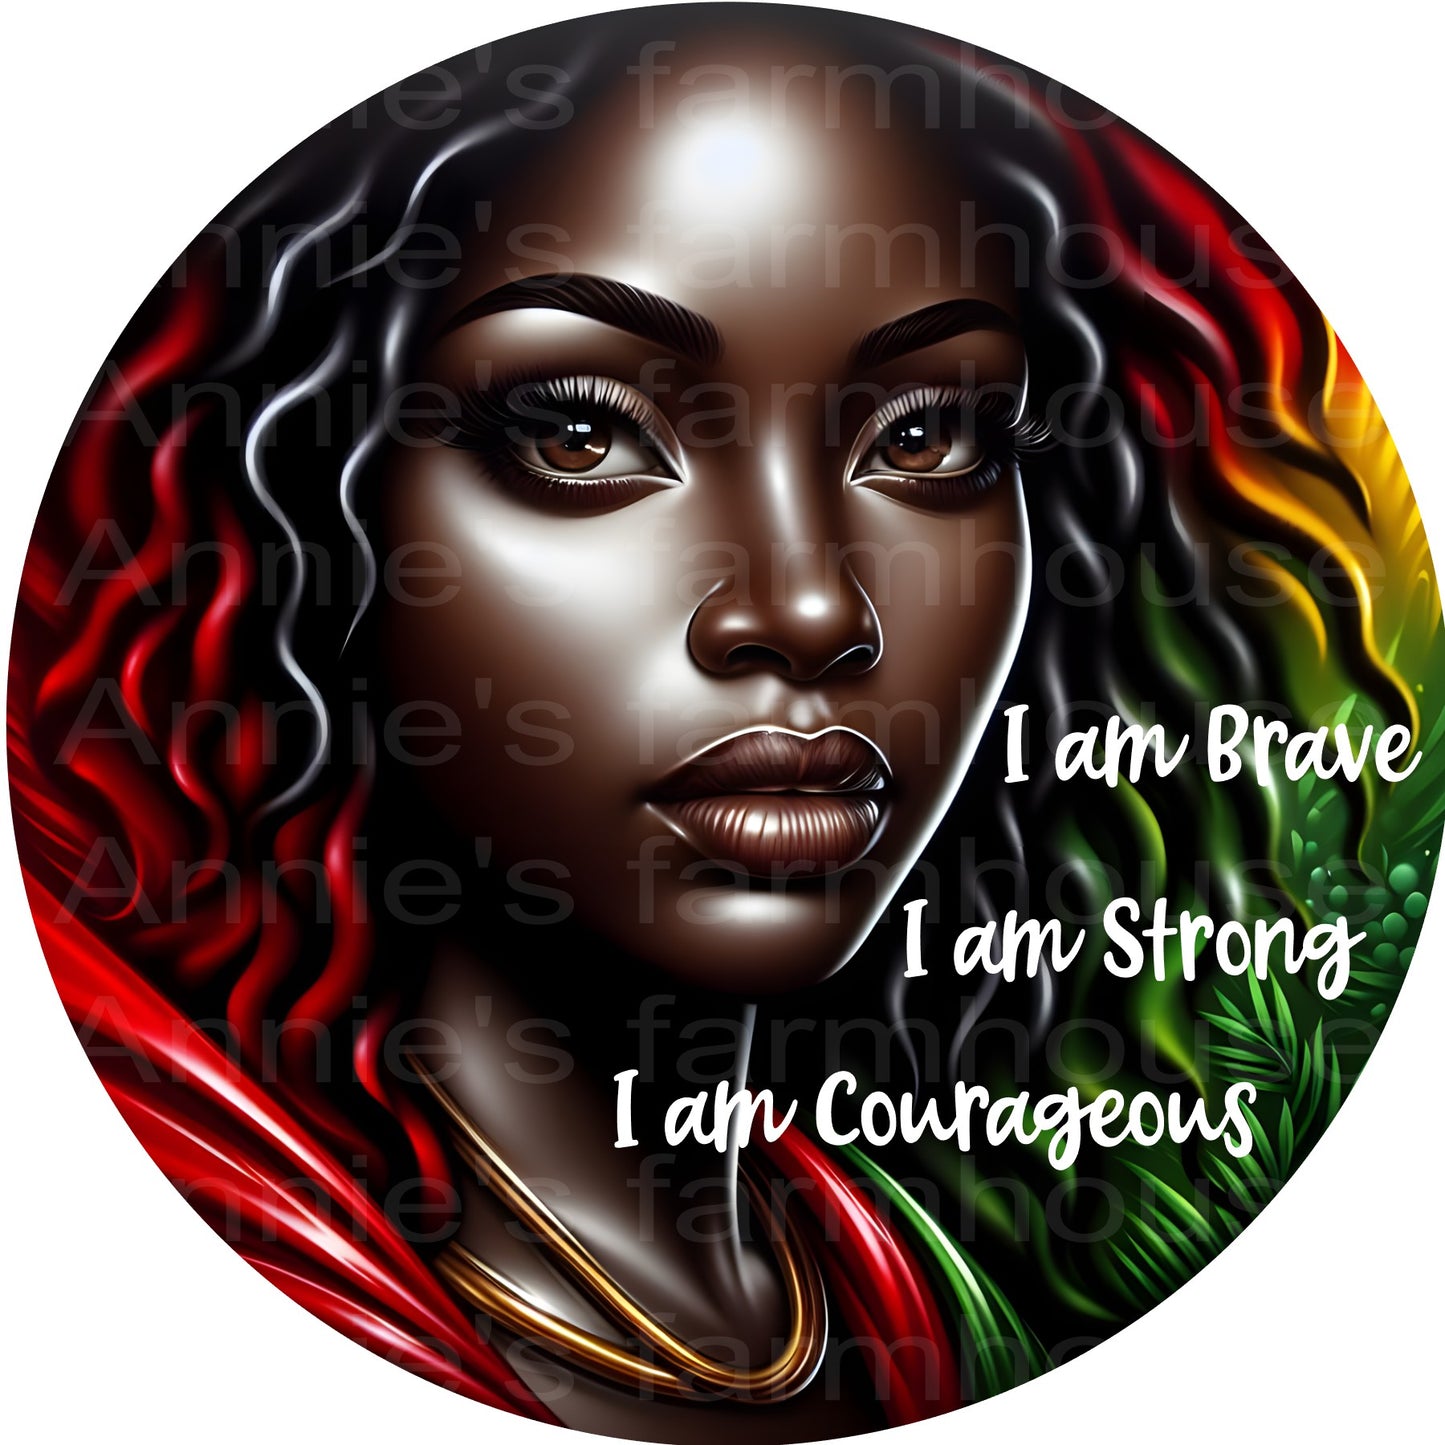 I am Strong, Diva Queen round metal wreath sign, Proud Black Woman, Juneteenth wreath attachment, wreath center